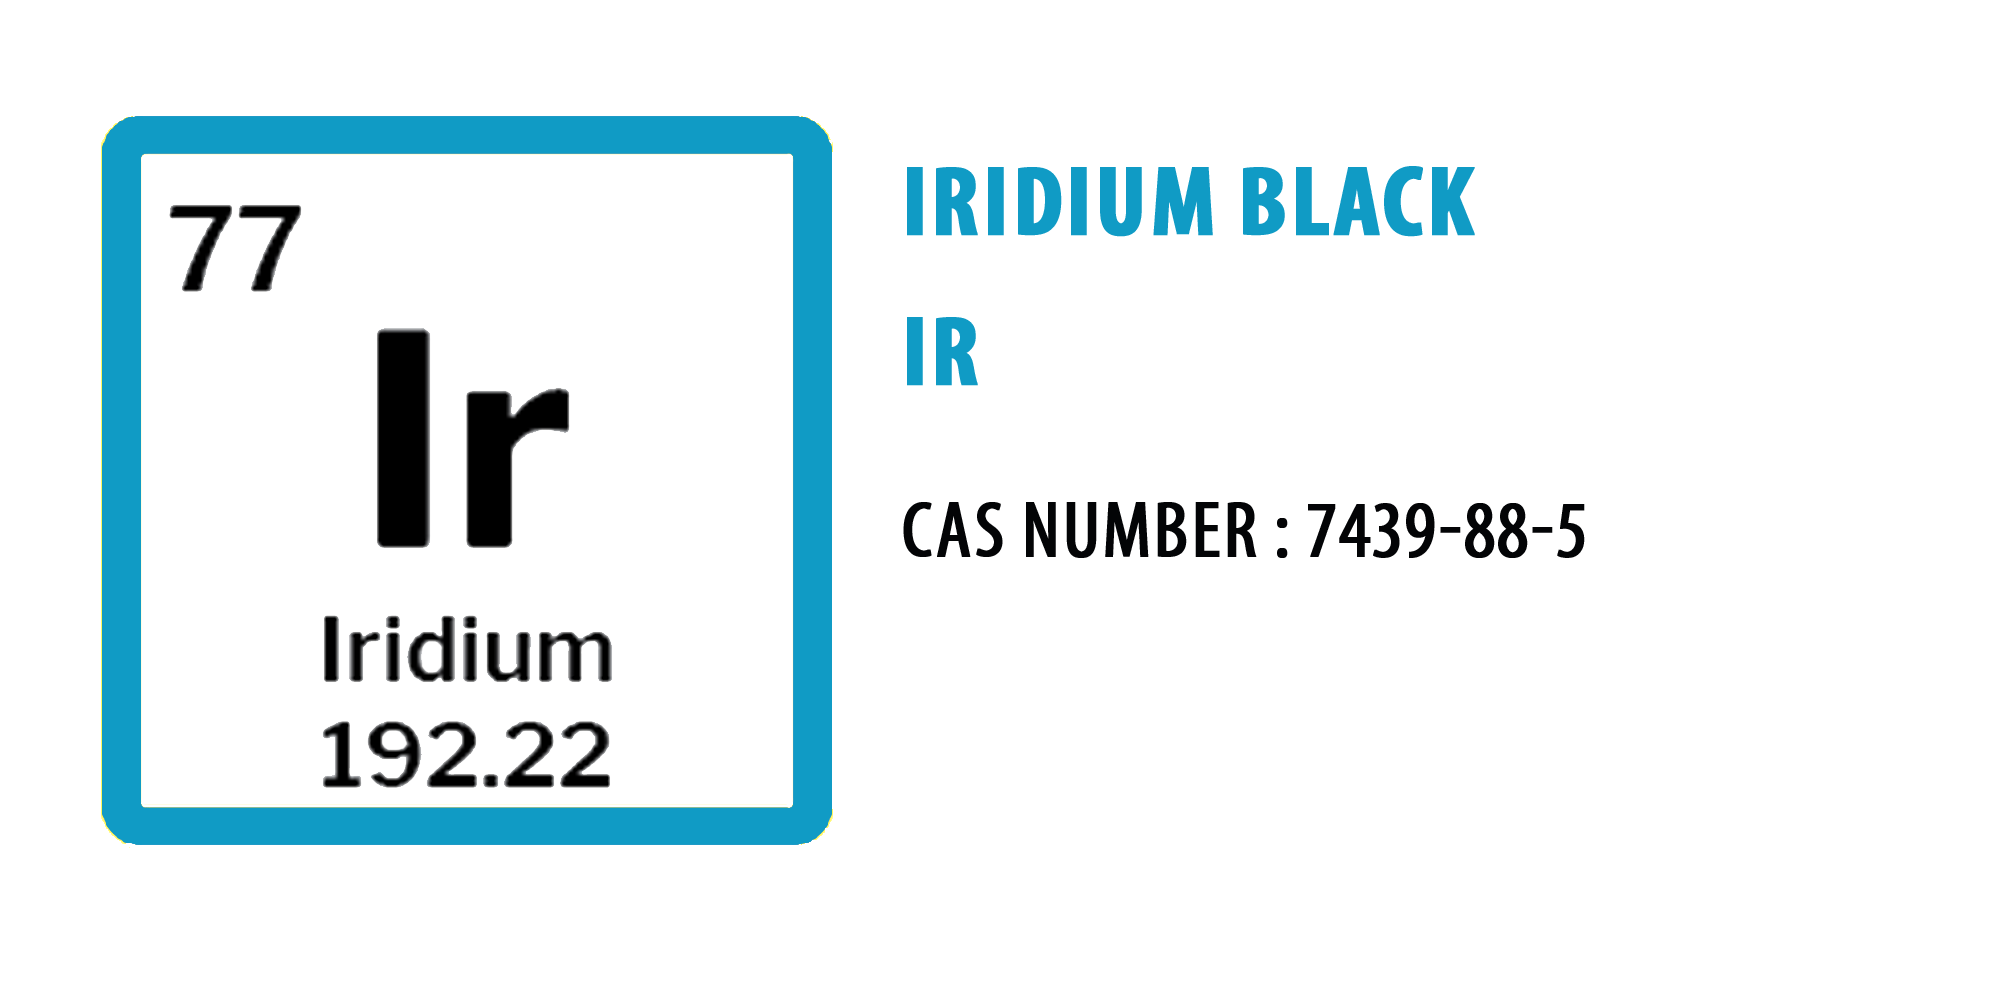 Iridium Black